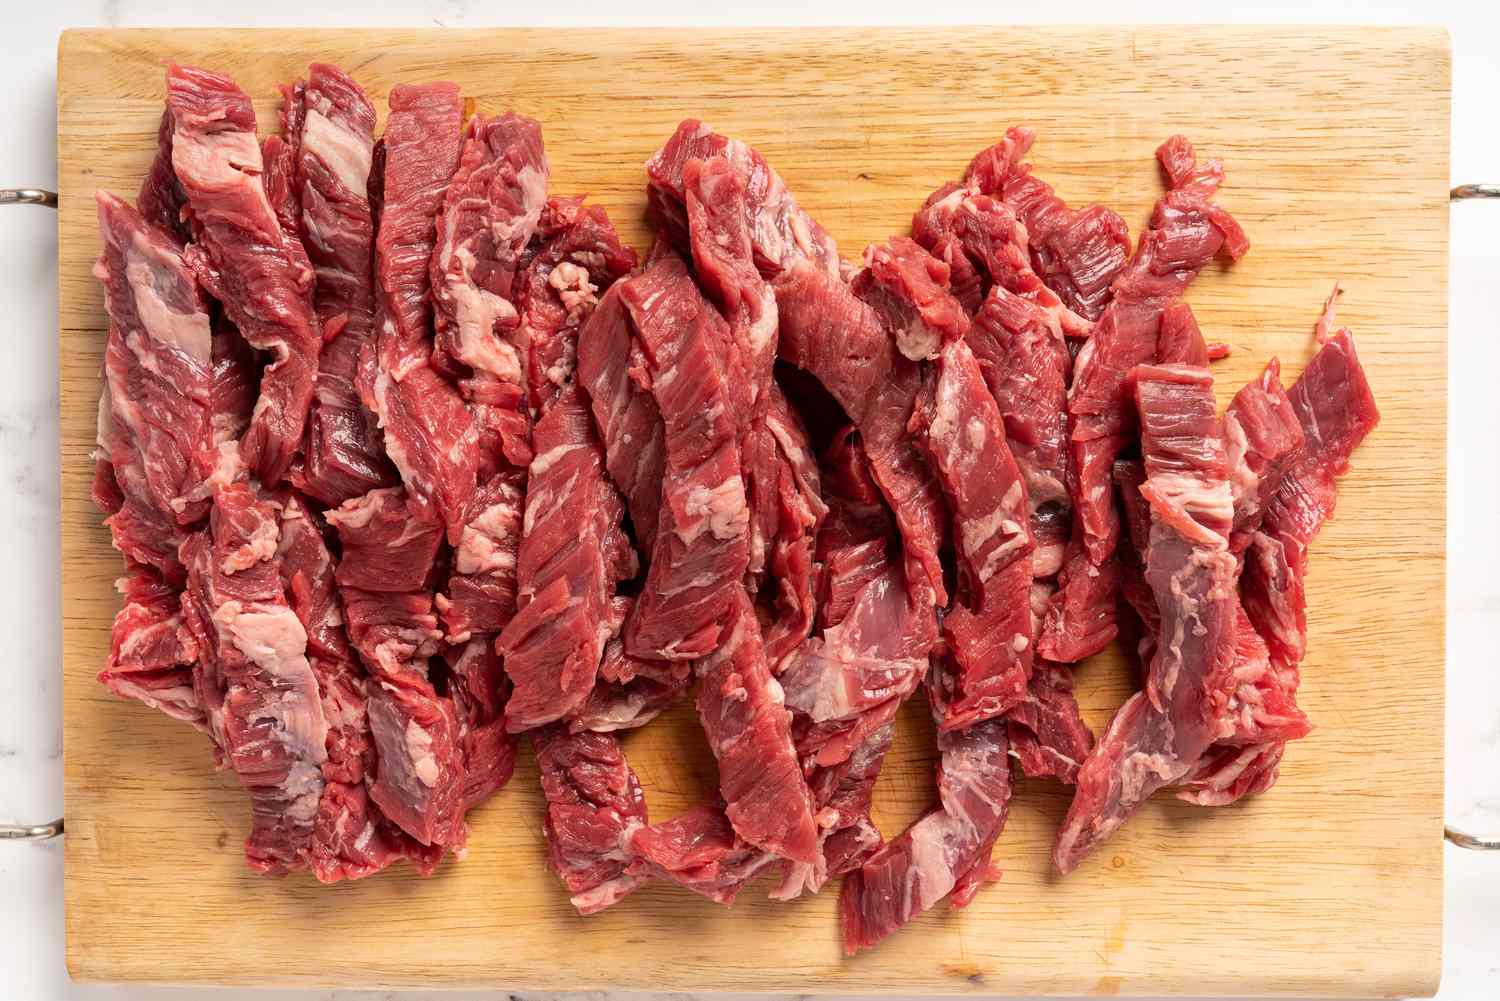 Steak cut across the grain into thin strips on a cutting board